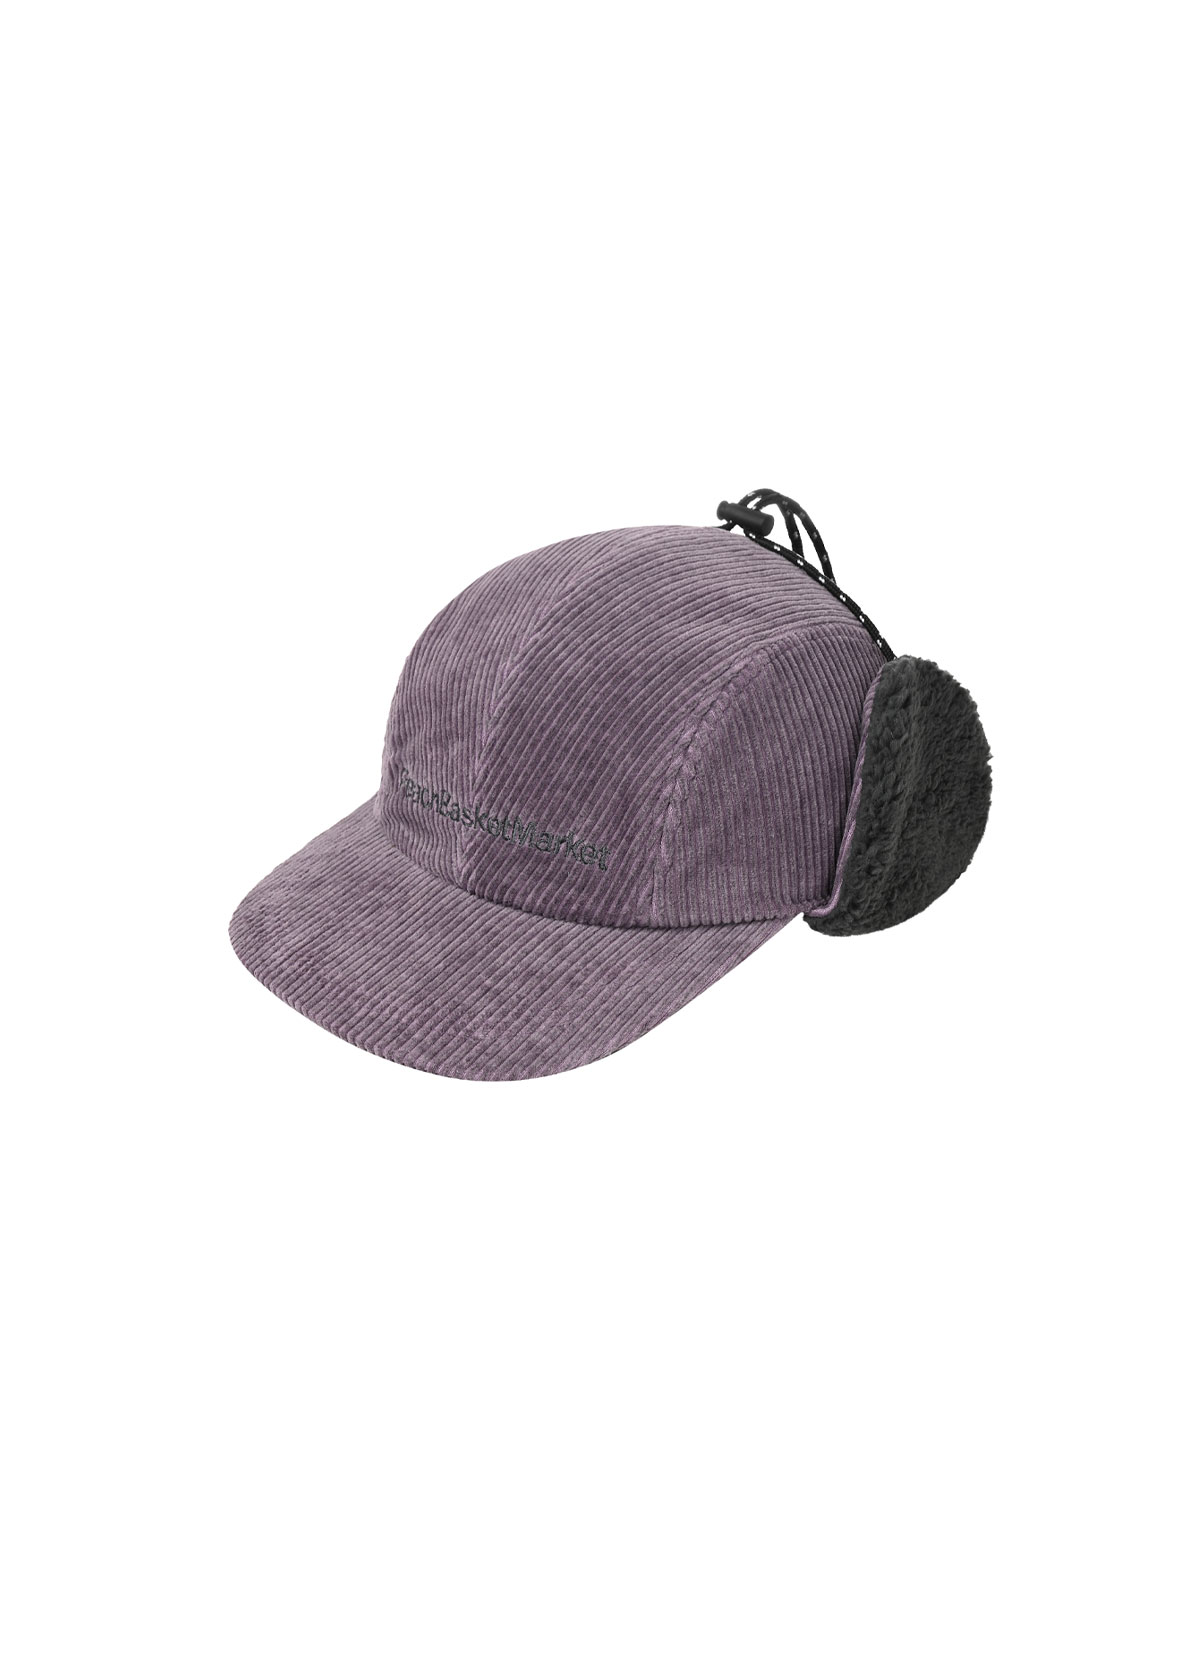 Pigment Trooper Hat (purple)